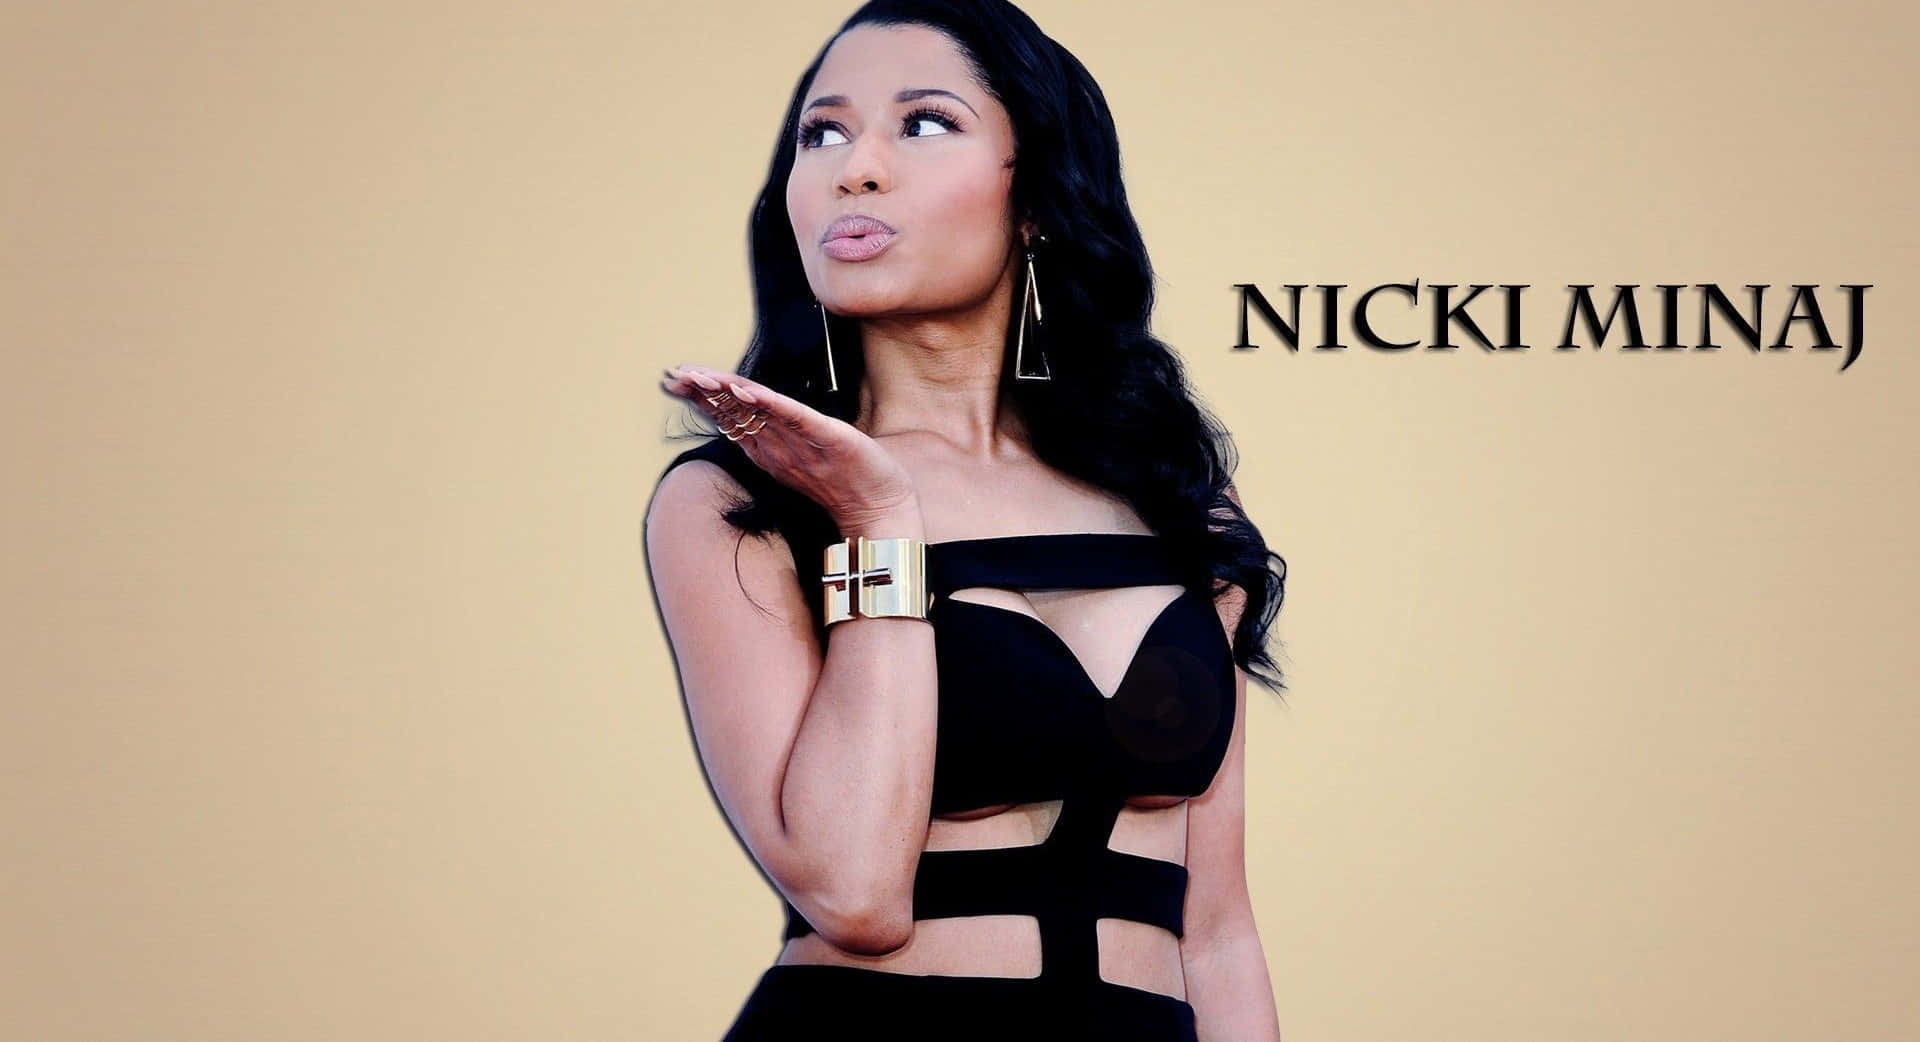 Nicki Minaj strikes a fierce pose in a colorful outfit